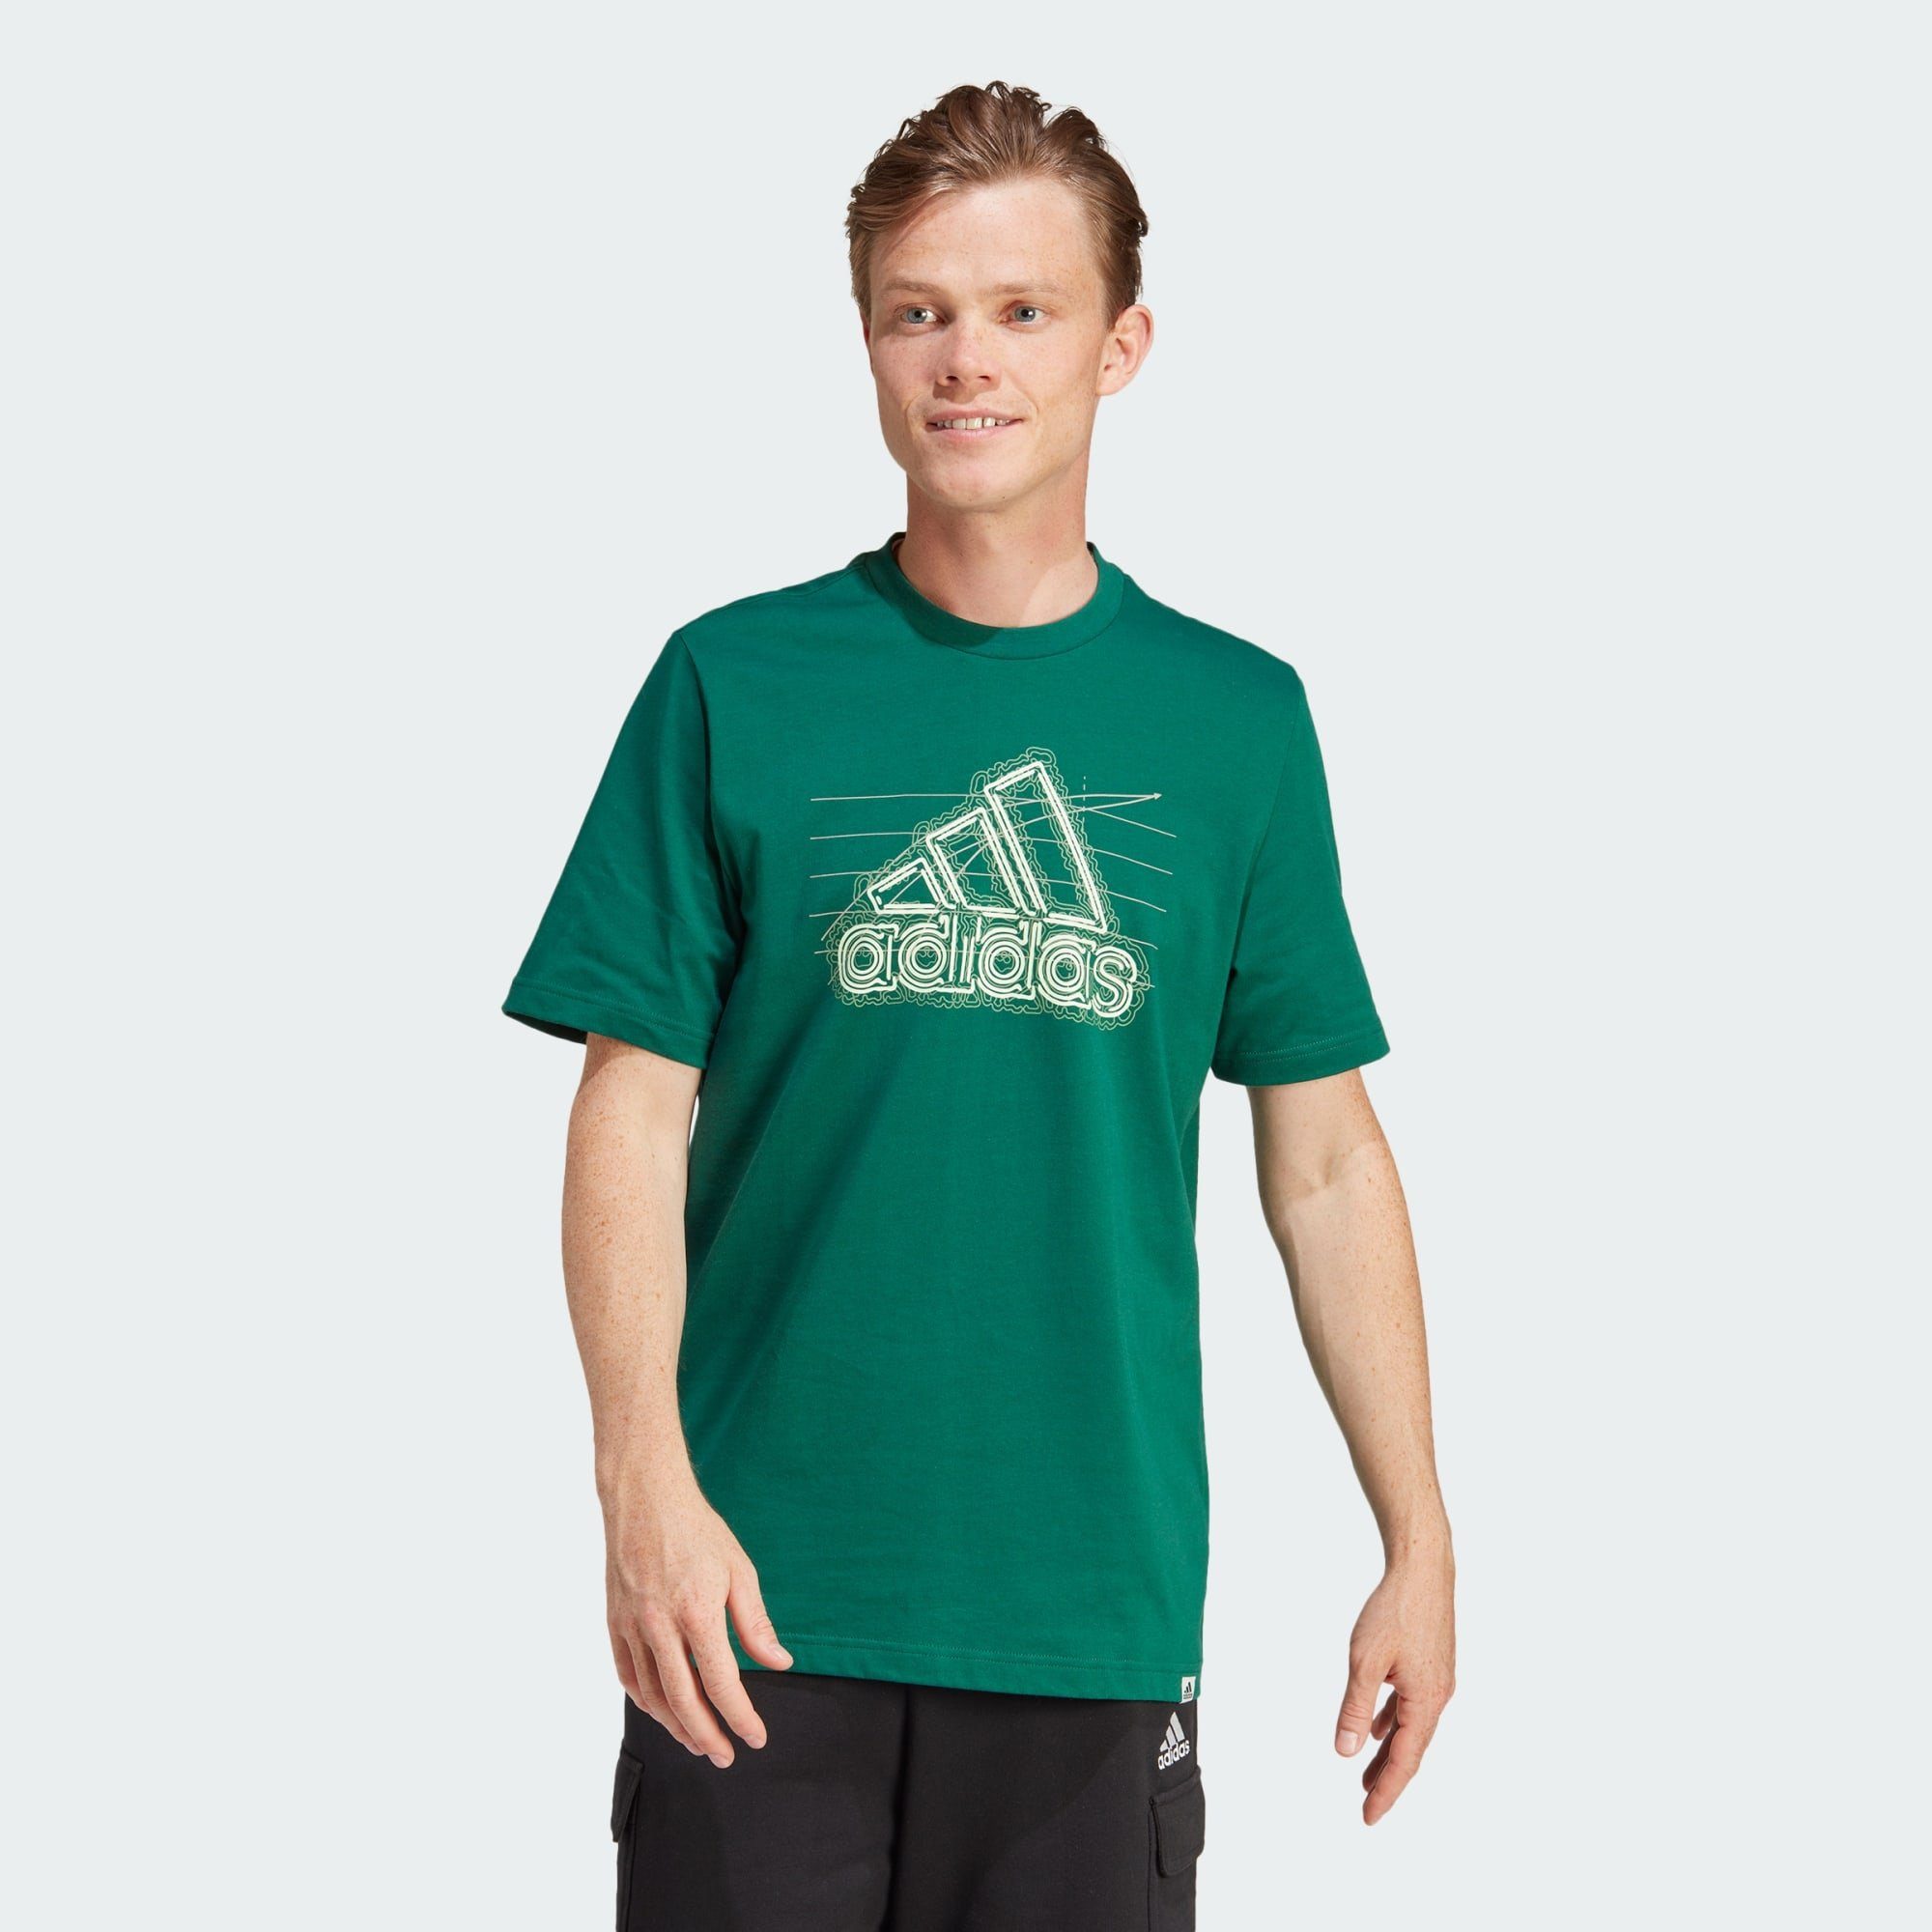 T-Shirt Sportswear T-SHIRT Collegiate adidas GROWTH Green GRAPHIC BADGE